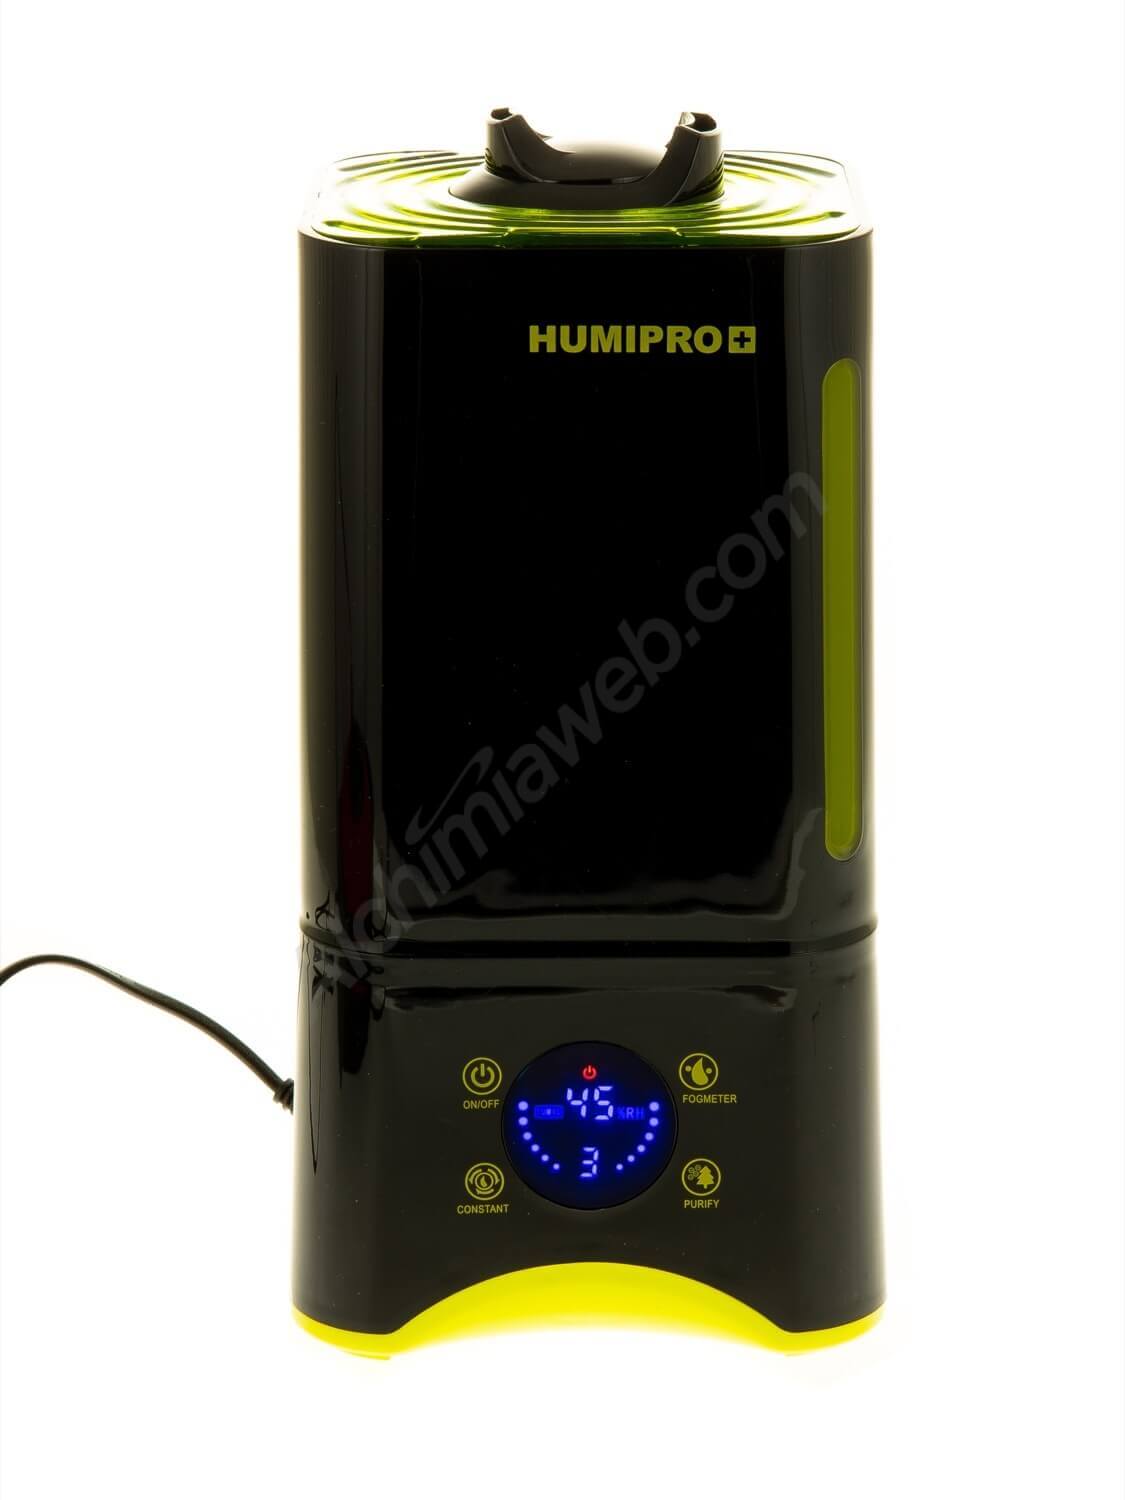 Vente de Humidificateur Garden Highpro 4L avec hygrostat